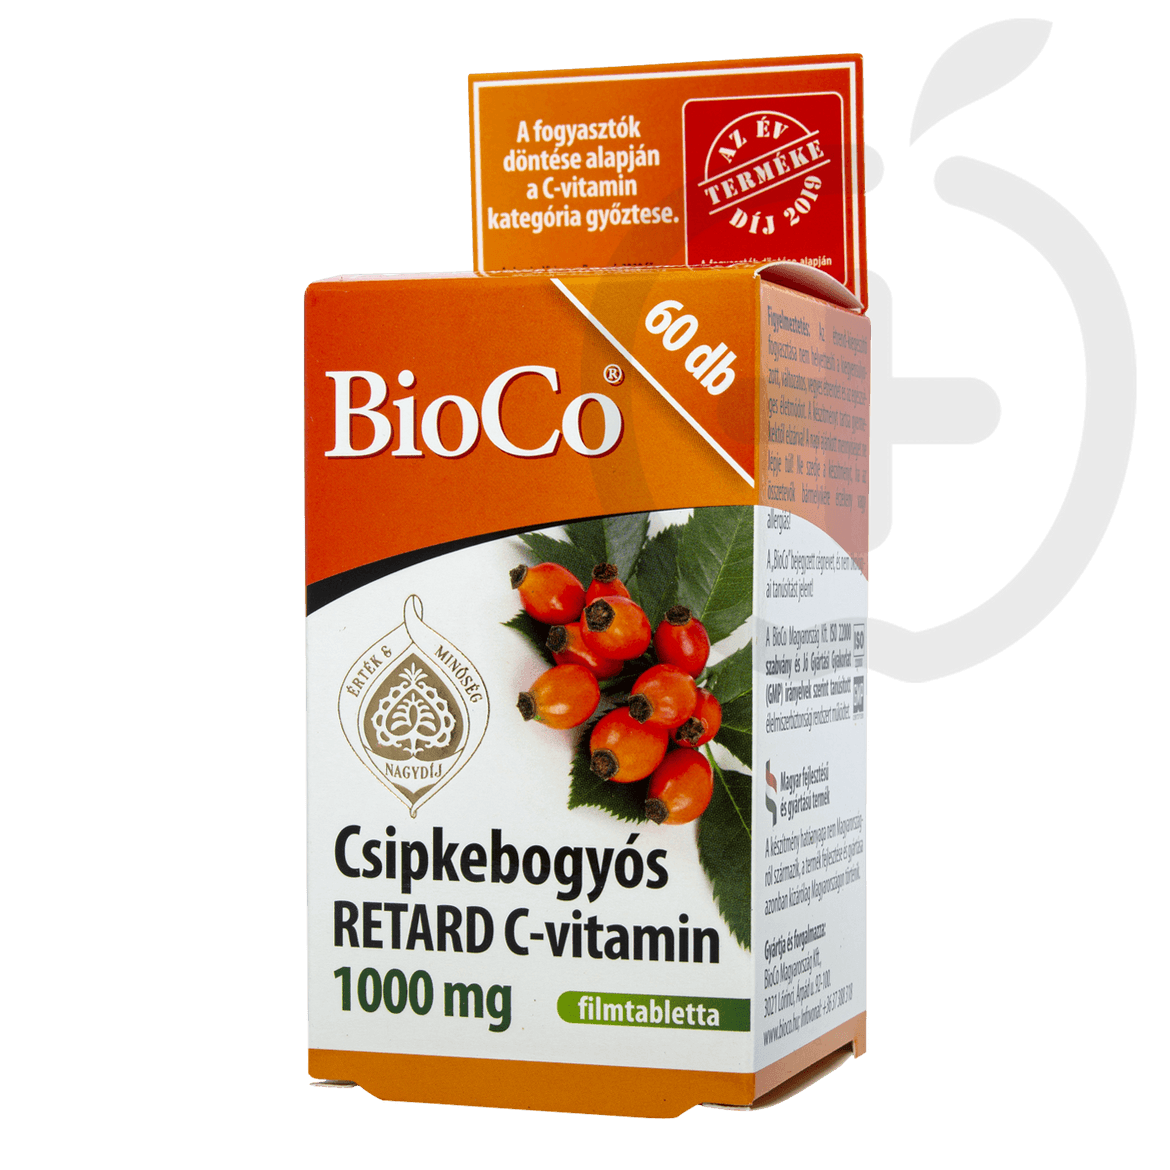 BioCo Csipkebogyó Retard C-vitamin 1000 mg filmtabletta